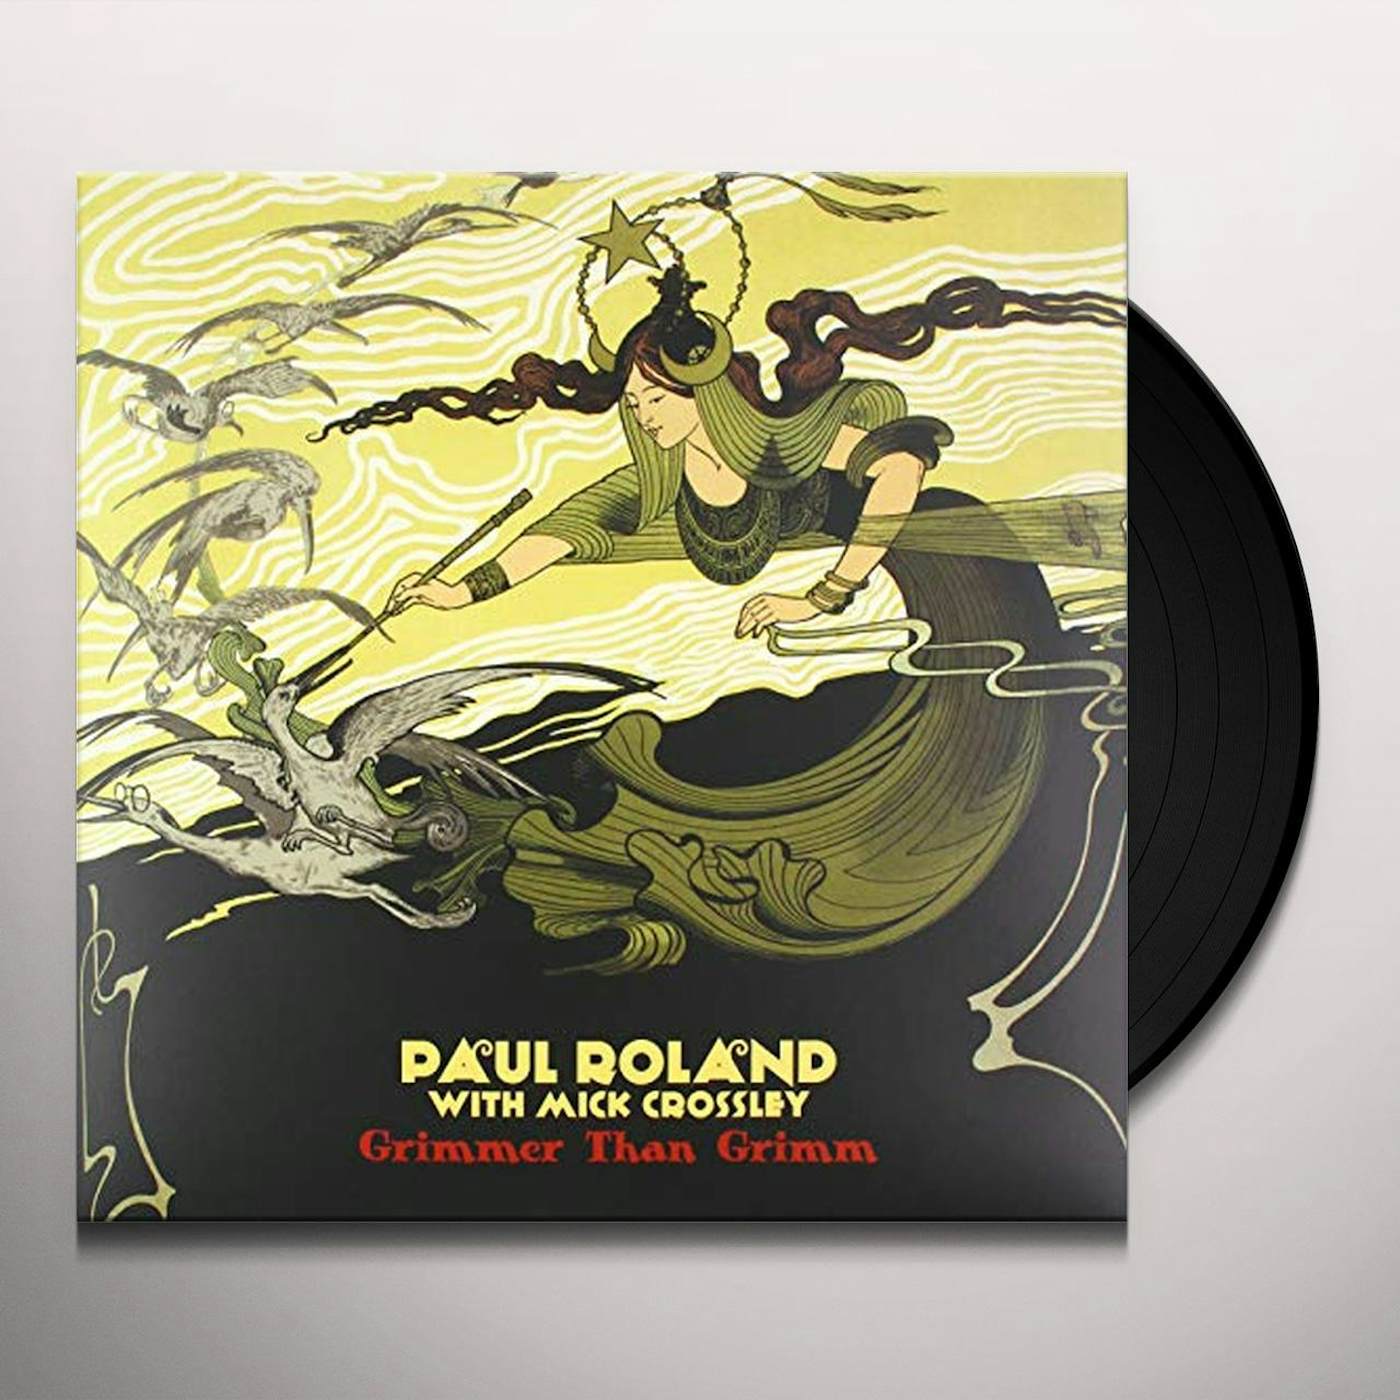 Paul Roland Grimmer Than Grimm Vinyl Record